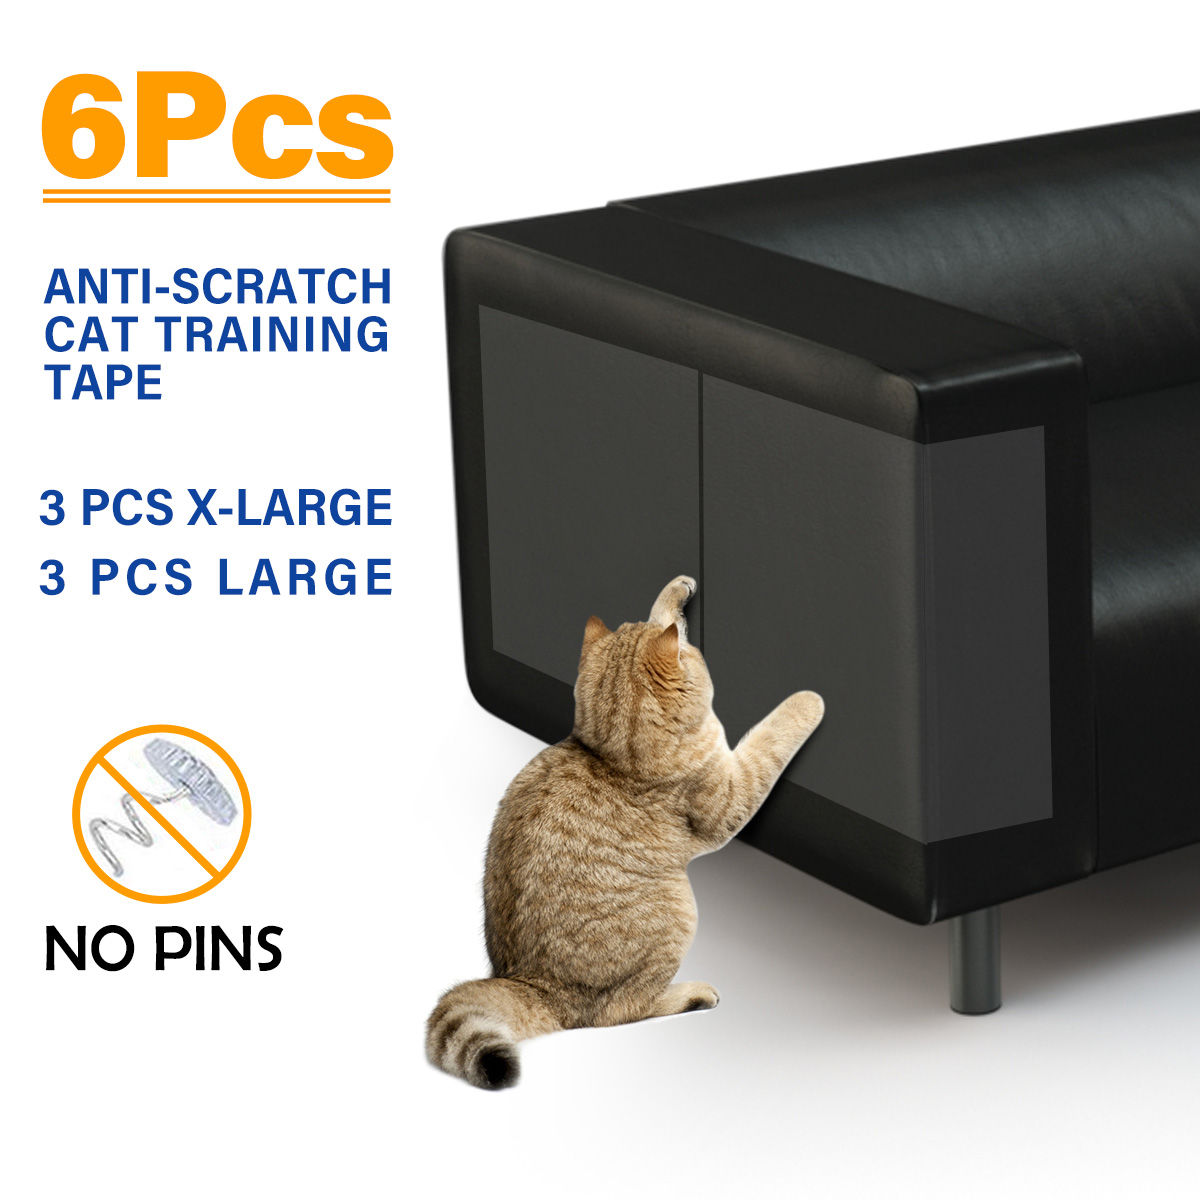 Focuspet-Furniture-Protectors-from-Cats-6Pcs-Cat-Scratch-Deterrent-Tape-Anti-Scratch-Cat-Double-Side-1940475-1